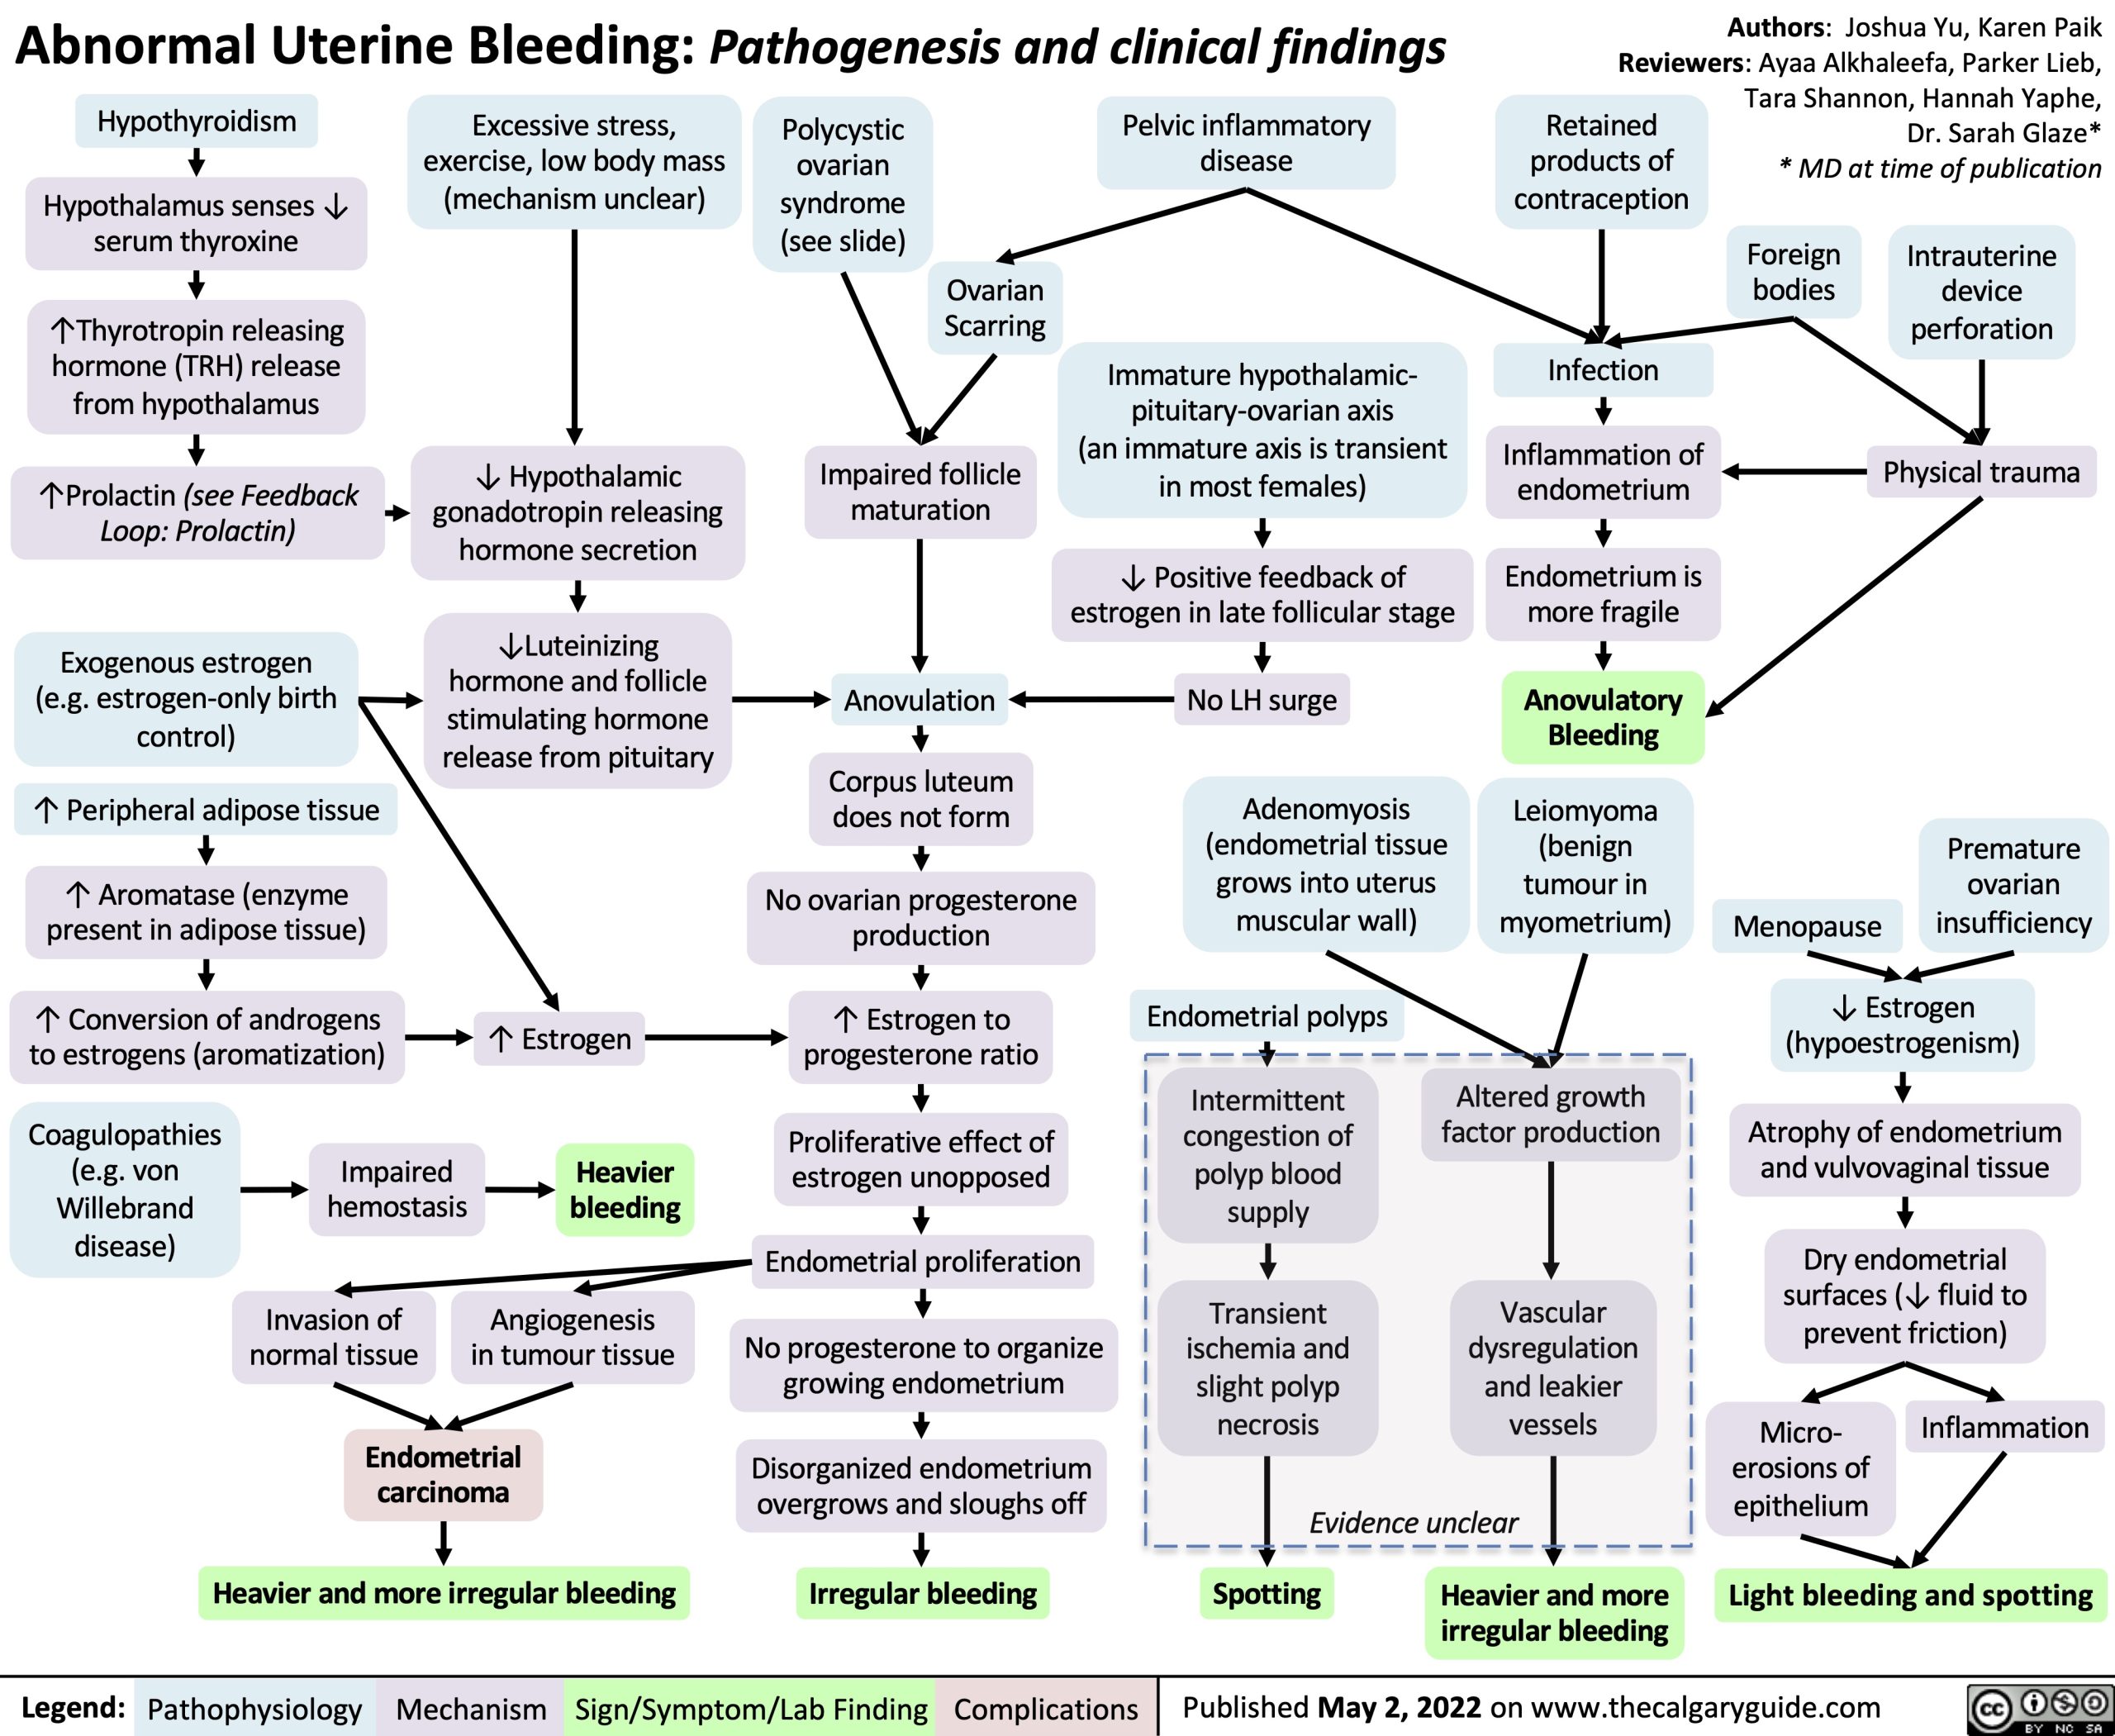 Abnormal Uterine Bleeding (AUB): Pathogenesis and clinical